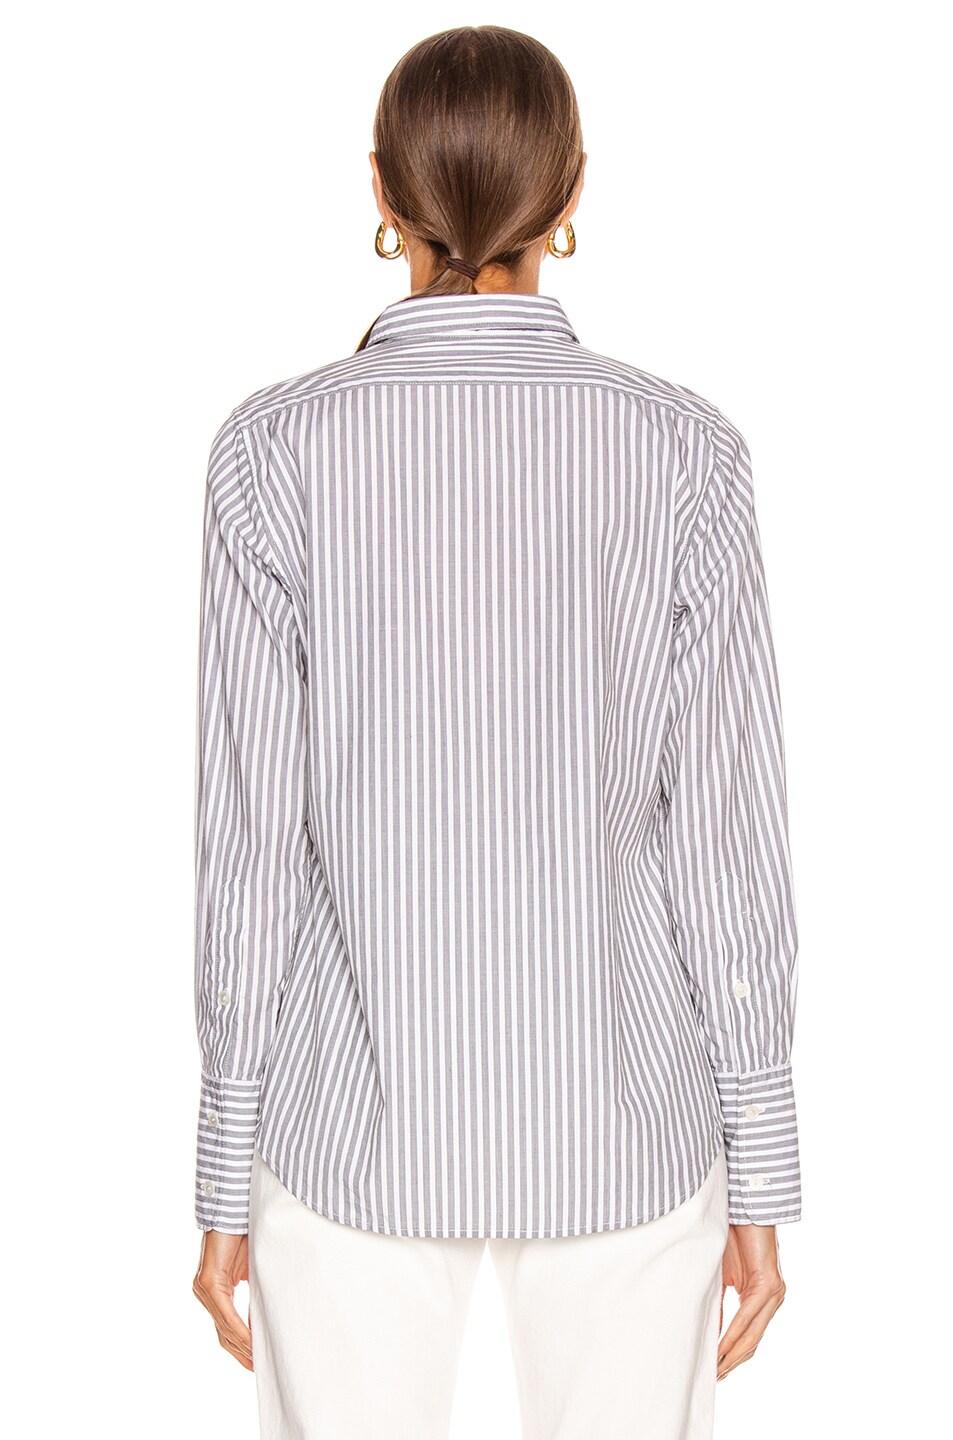 NILI LOTAN Helen Shirt in Grey & White Stripe | FWRD